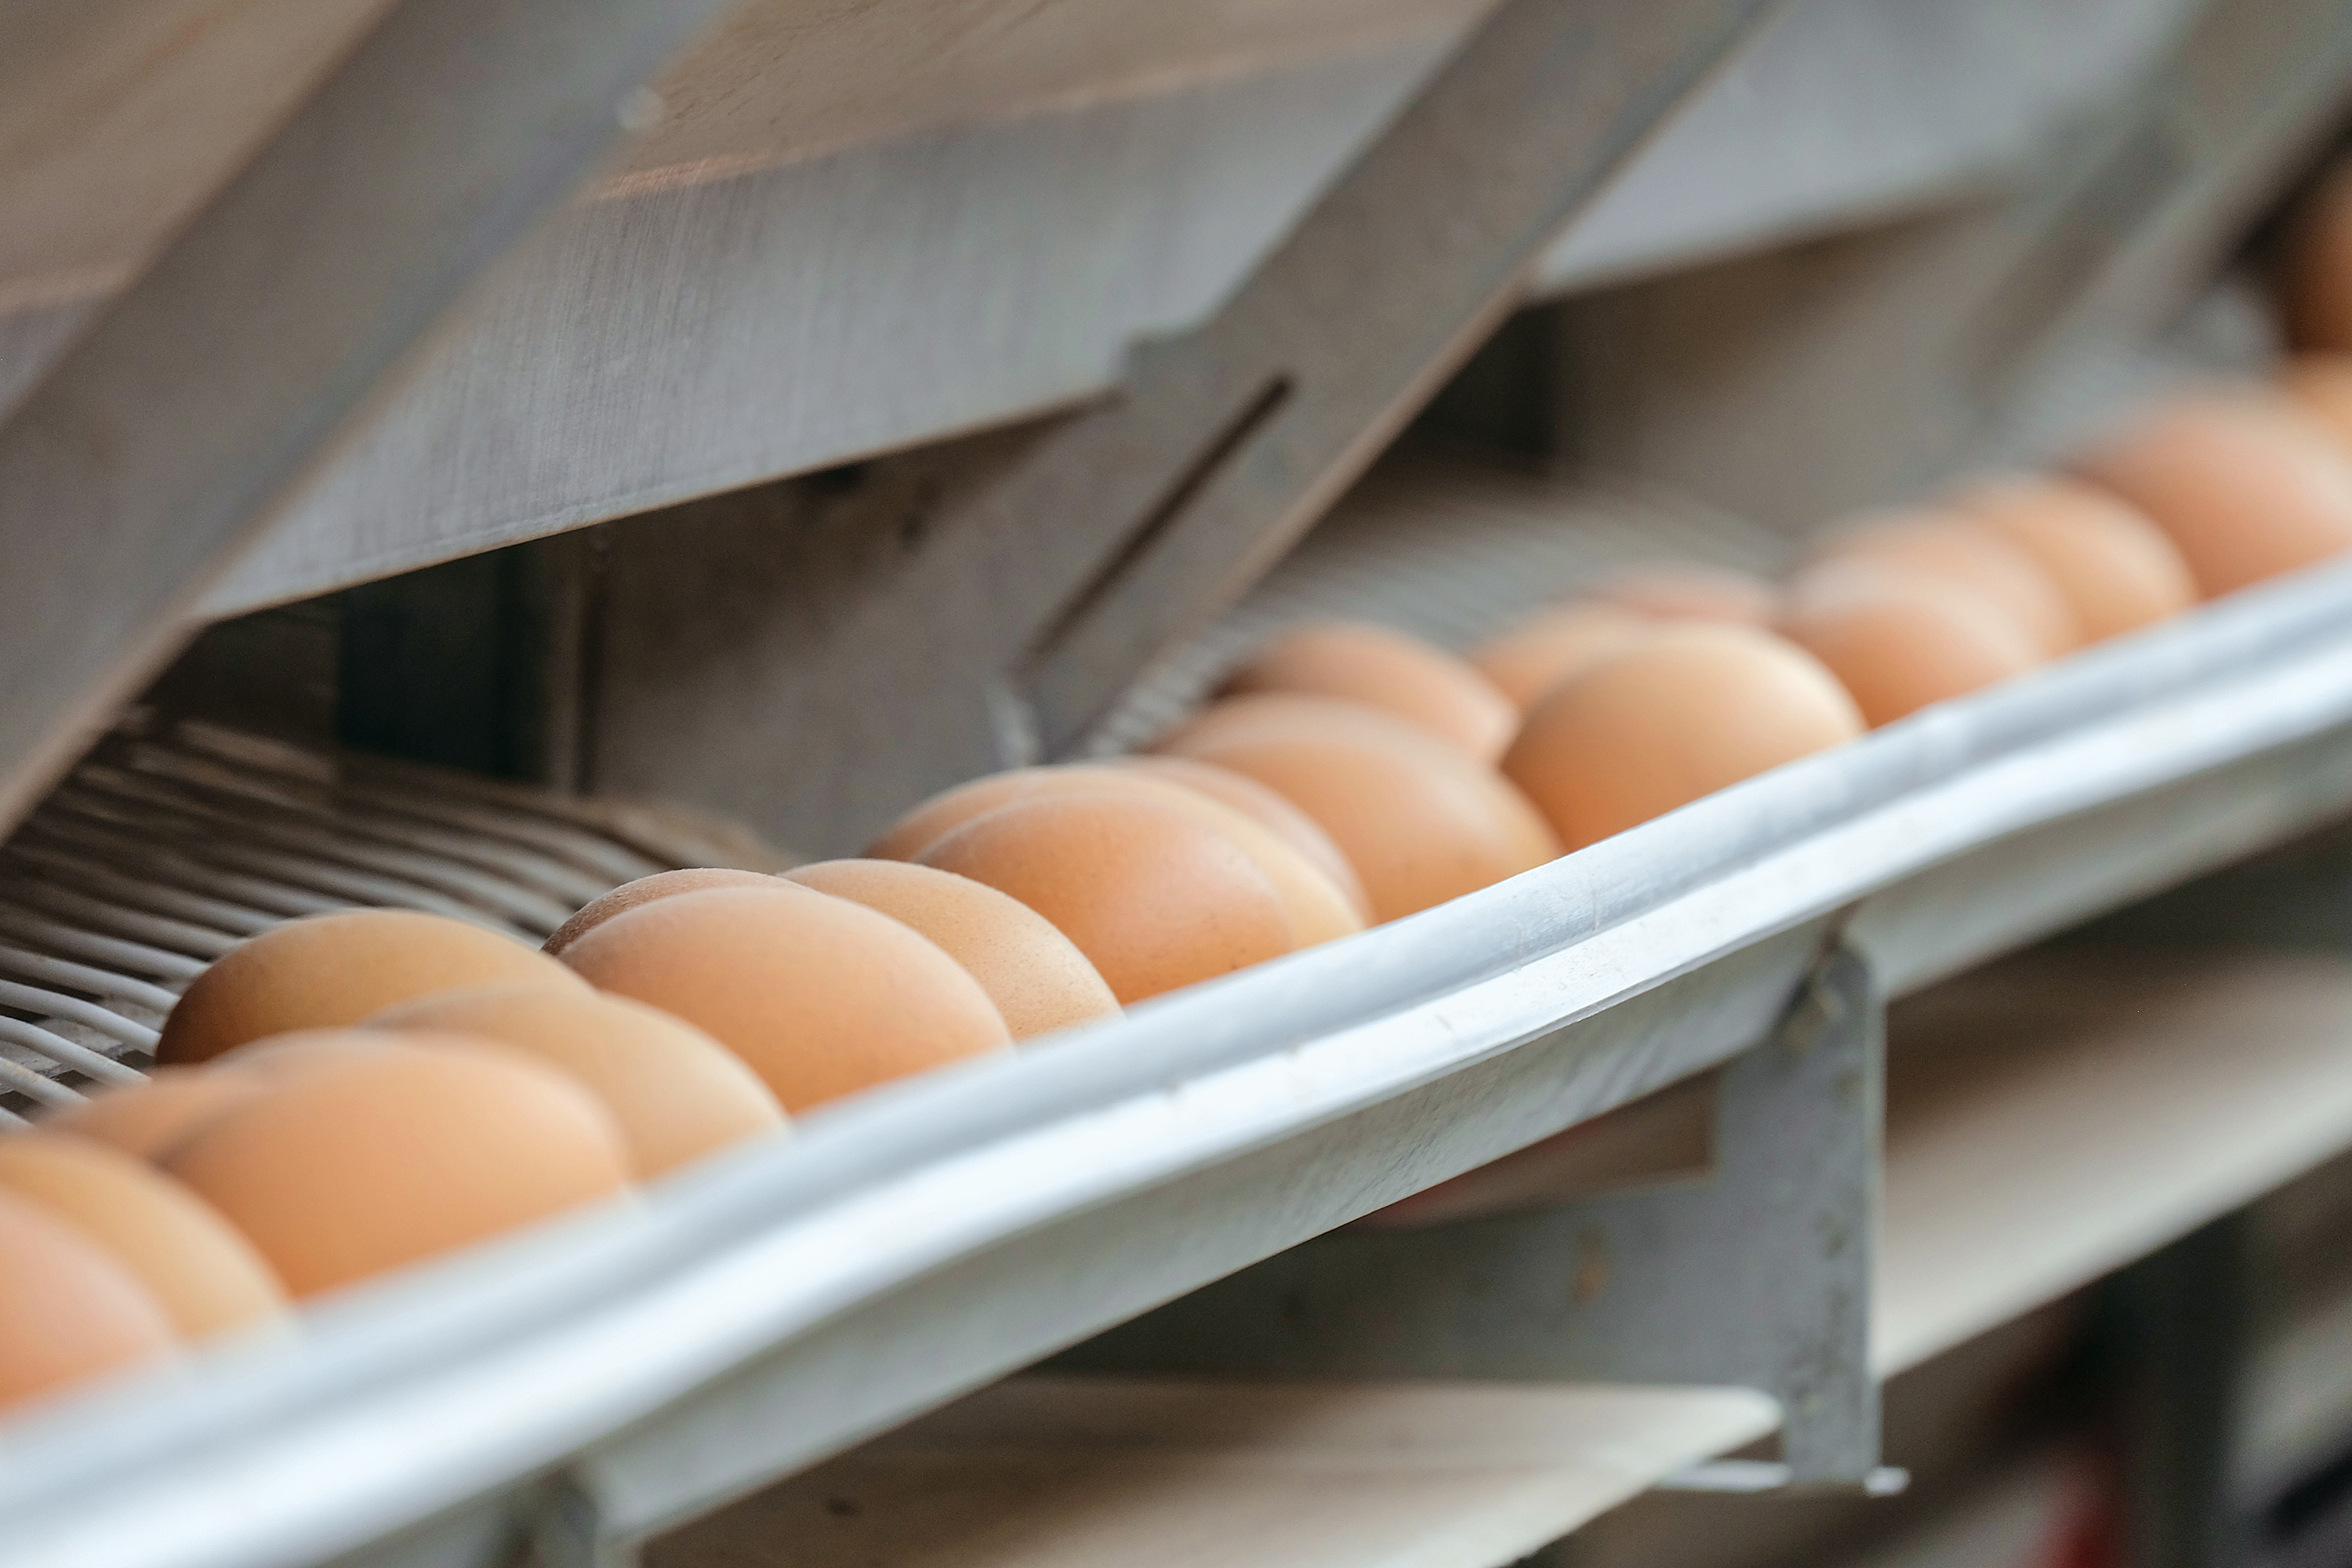 processed-egg-products-antitrust-settlement